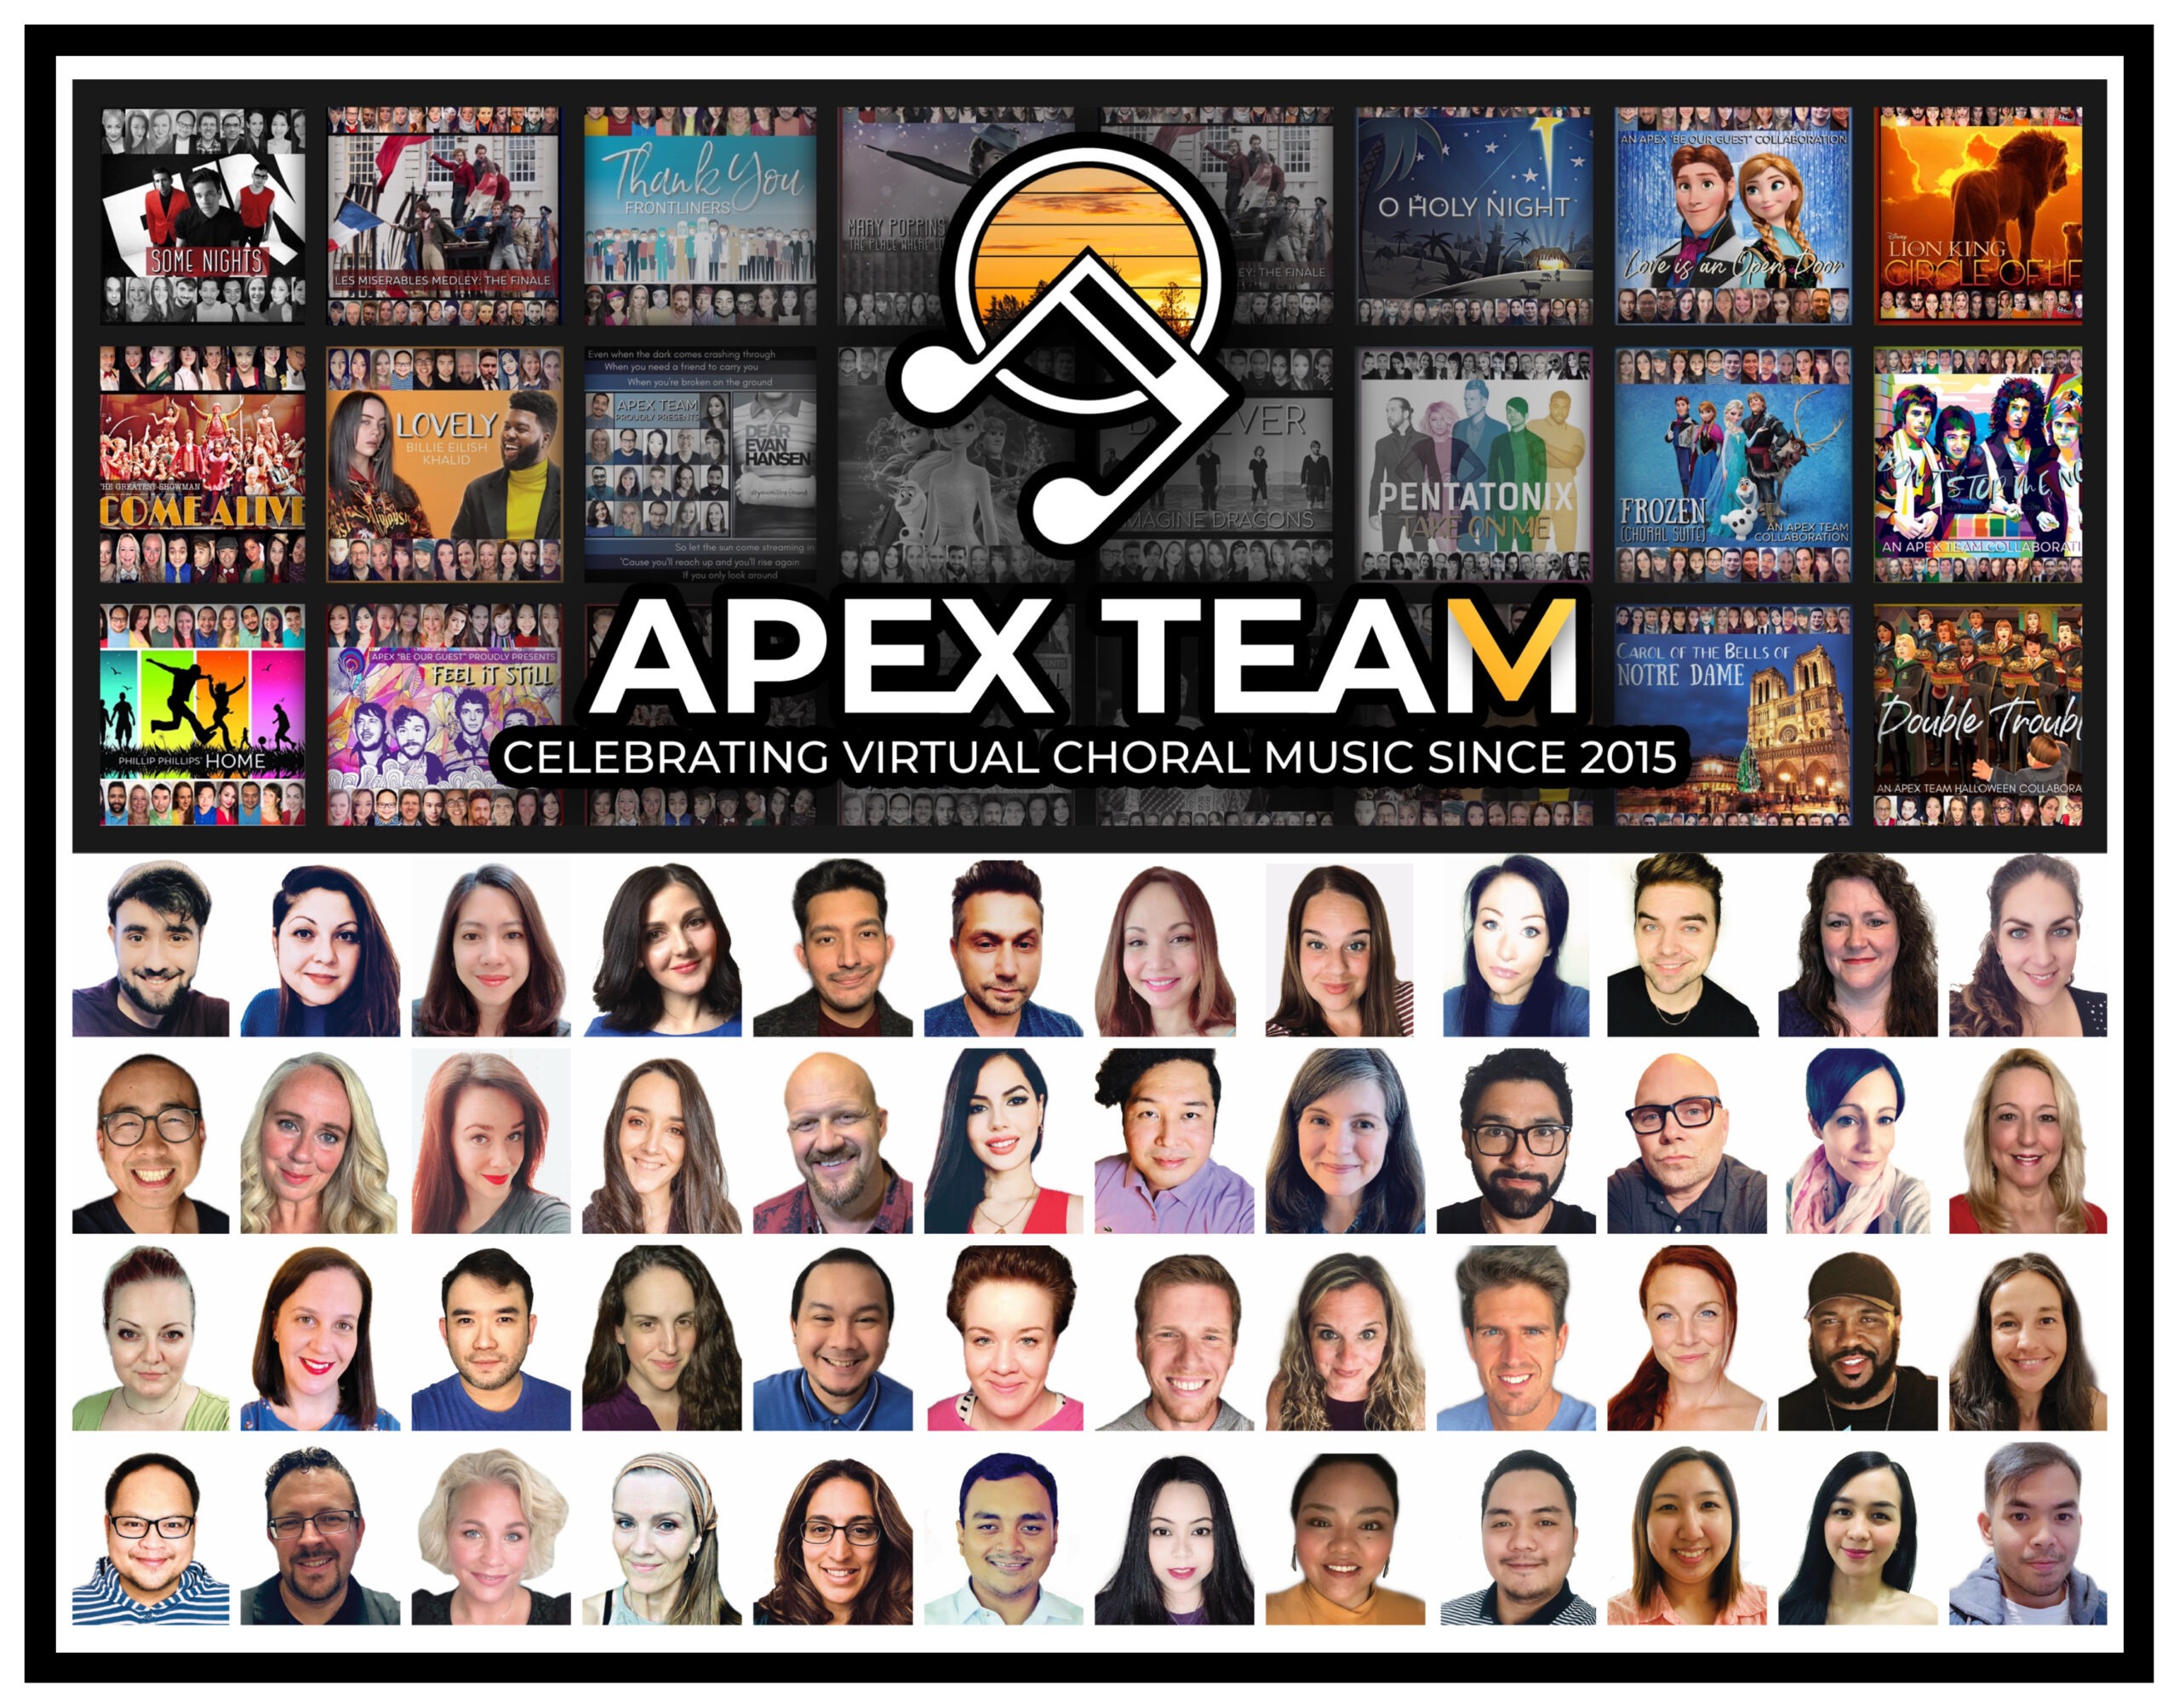 Full Apex team headshots